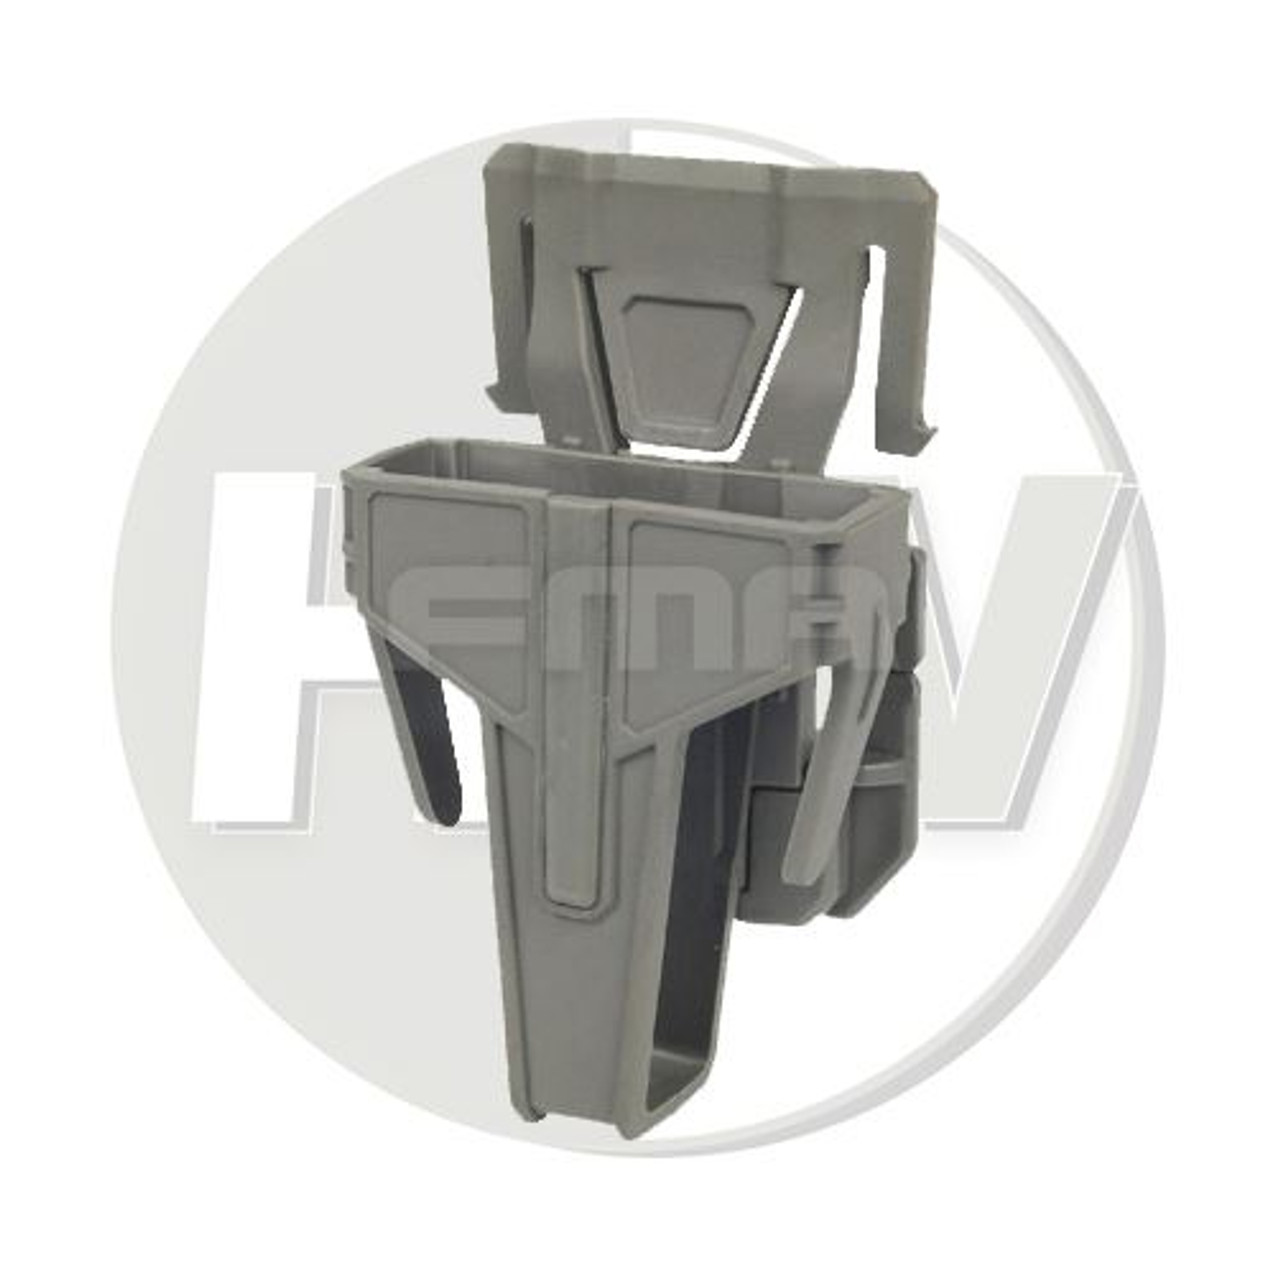 Fma Nylon Fsmr Locking Magazine Pouch For M4 5.56 Molle Type Fg Green